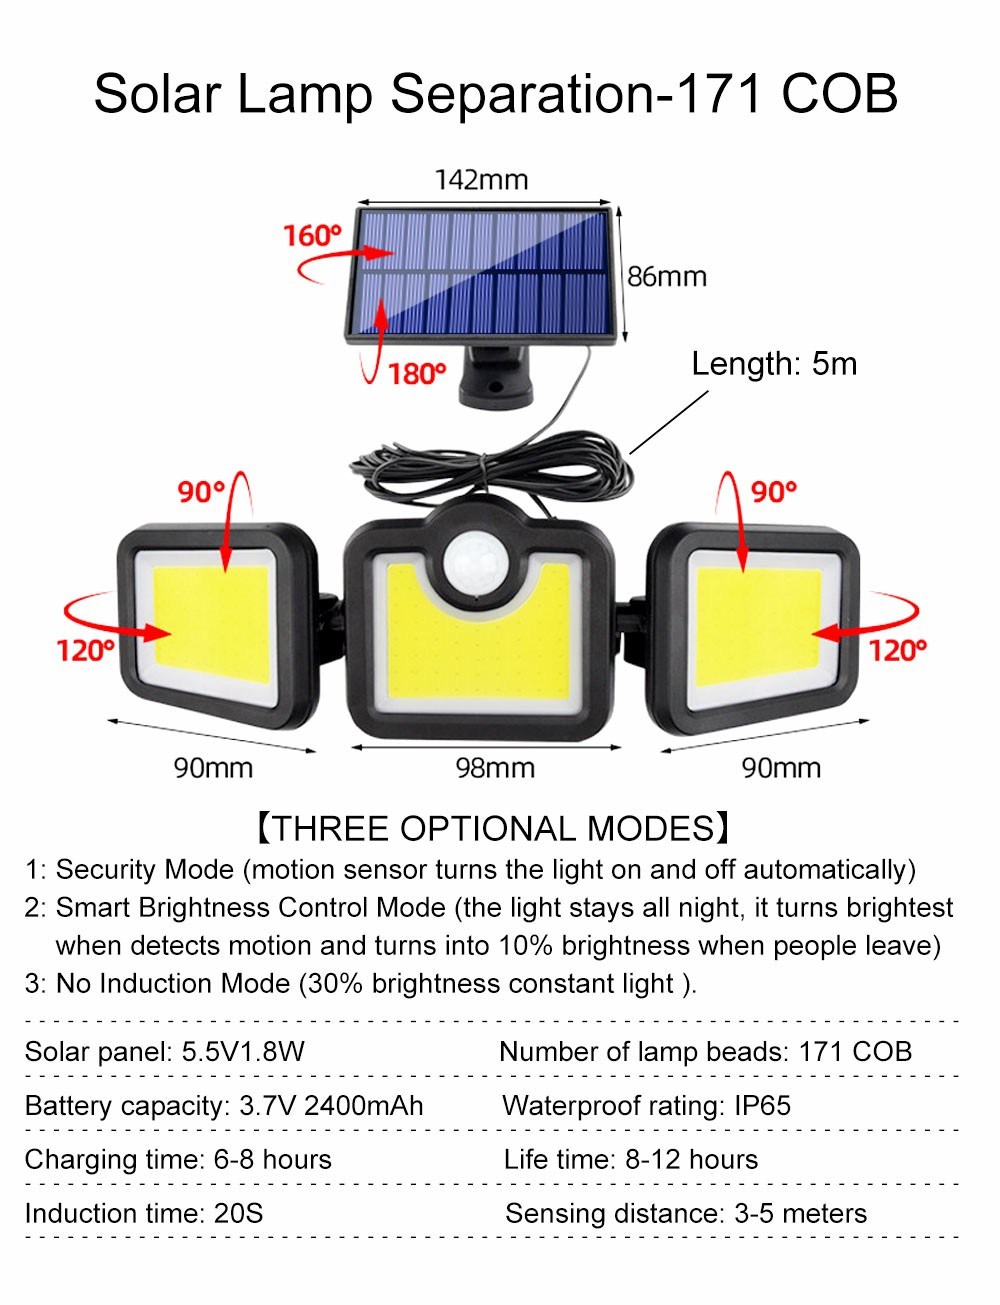 Solar-Lights-Outdoor-171COB-108122138LEDs-Motion-Sensor-Light-3-Head-Remote-Control-Wall-Light-270-W-1828473-8